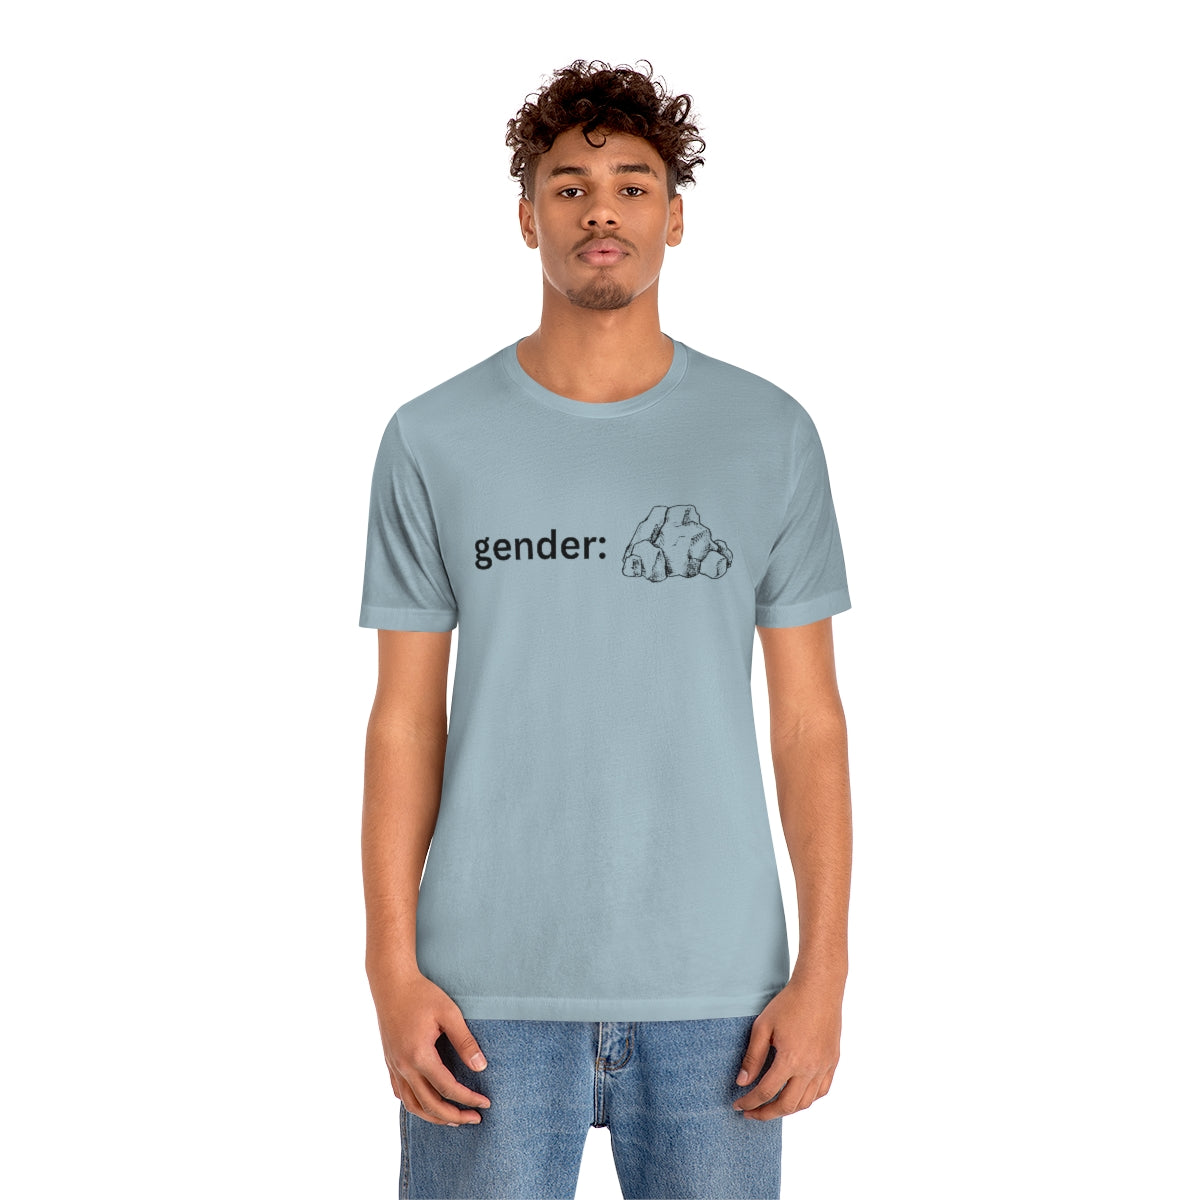 "rocks don't have gender, just like some people" Shirt